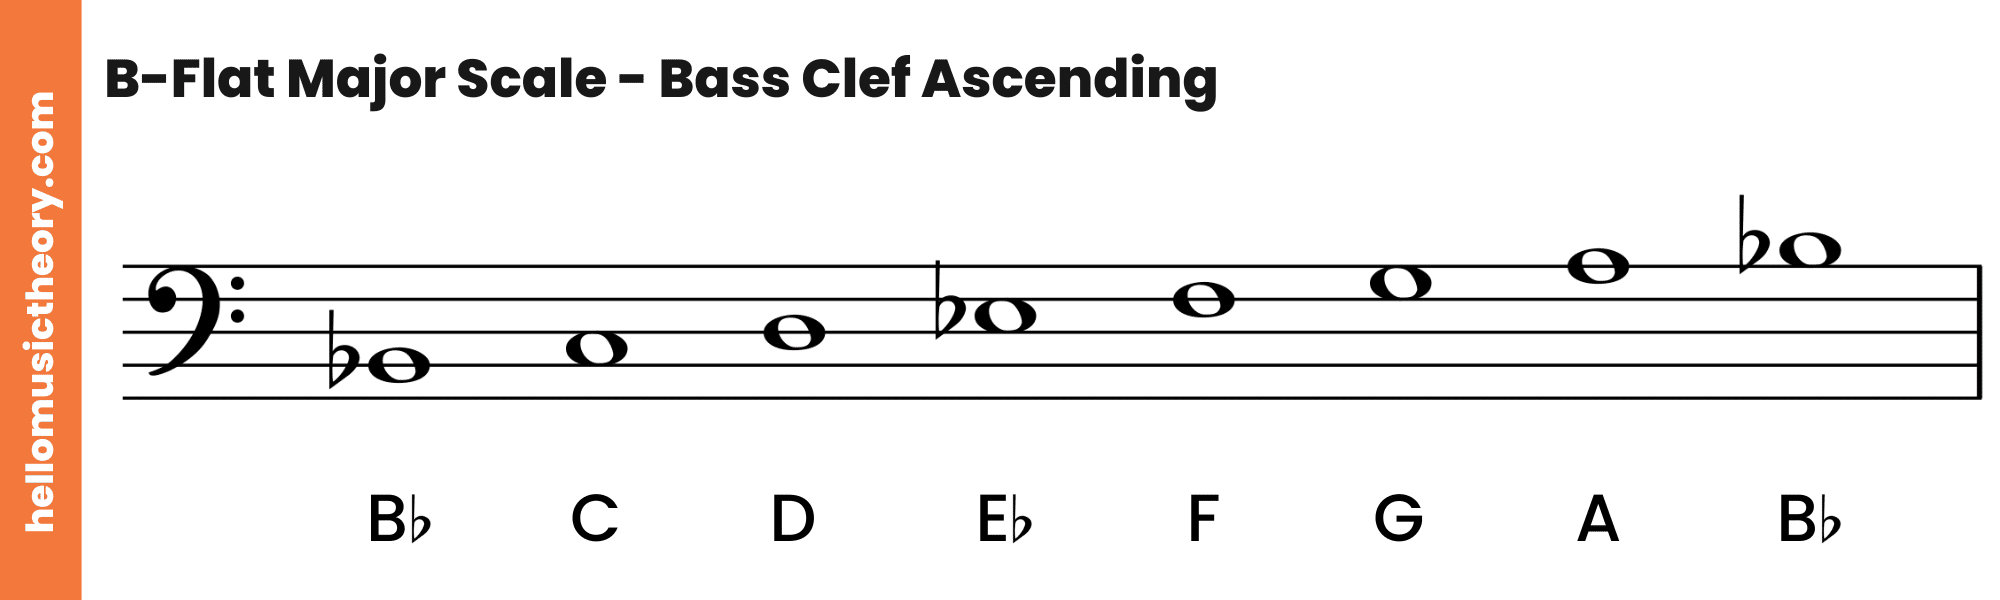 B-Flat Major Scale Bass Clef Ascending